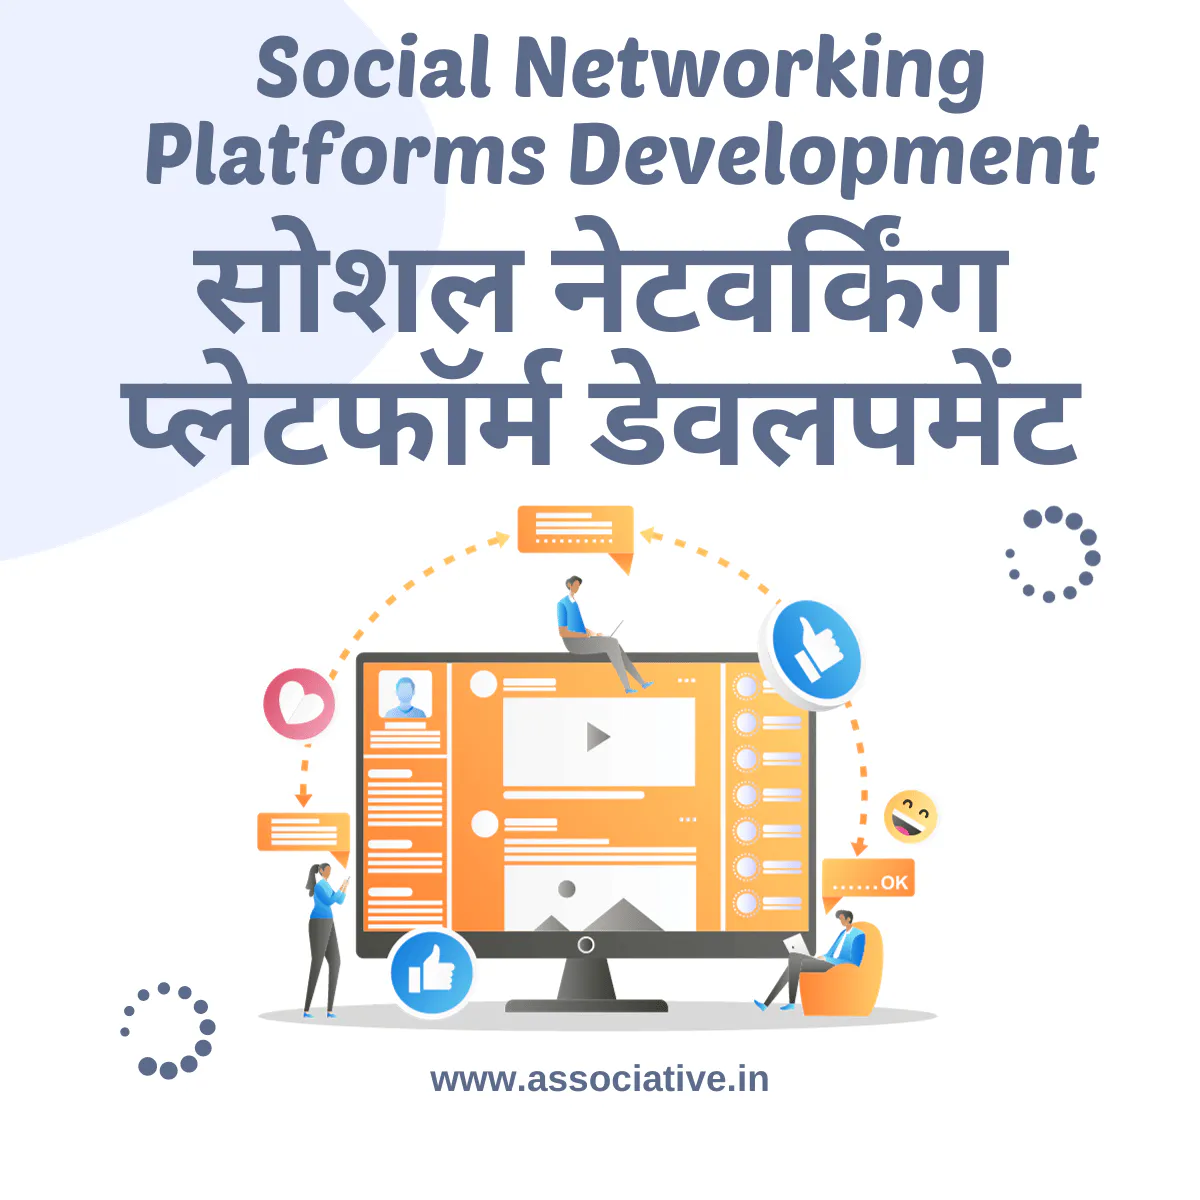 Social Networking Platforms Development